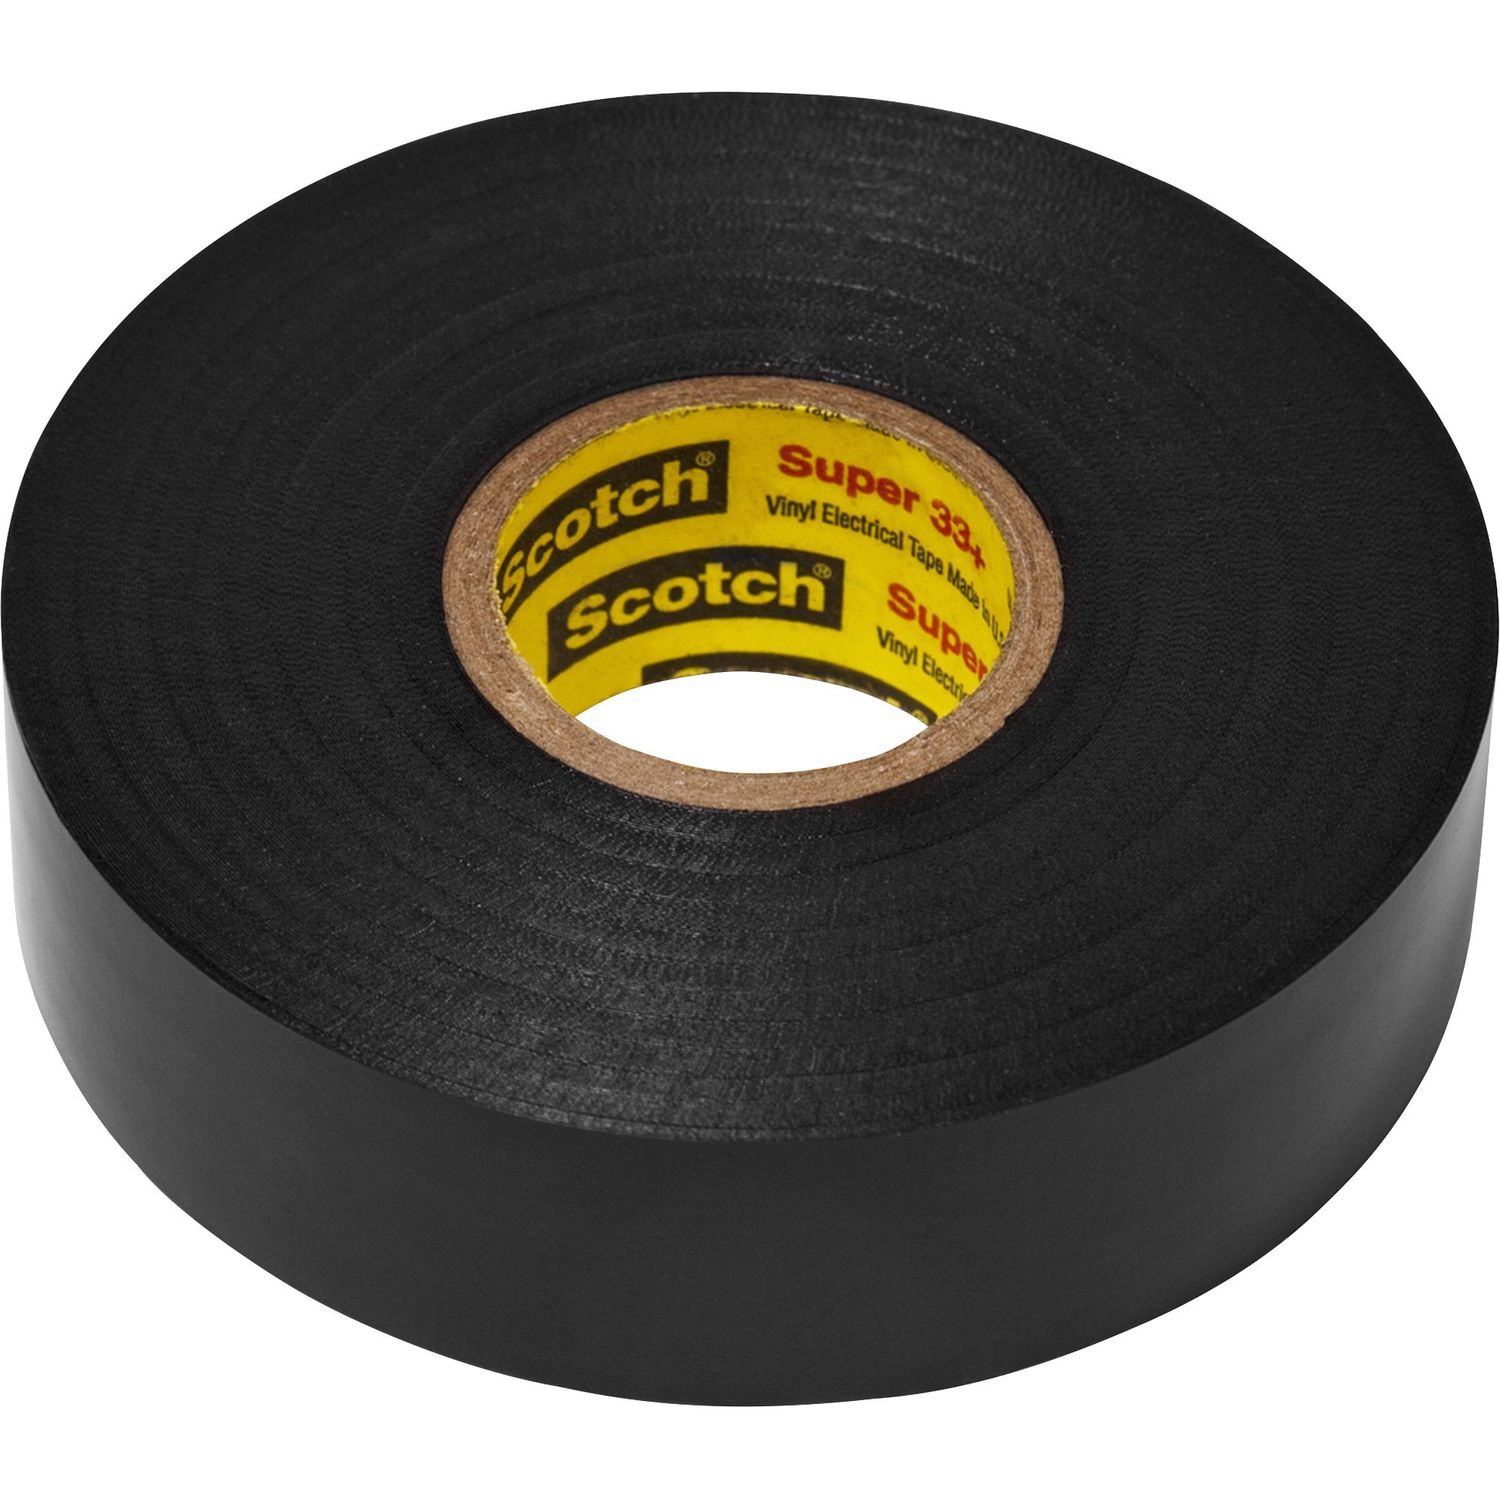 Super 33 Plus Vinyl Electrical Tape 22 yd Length x 0.75" Width, Rubber, Vinyl Backing, 10 / Carton, Black